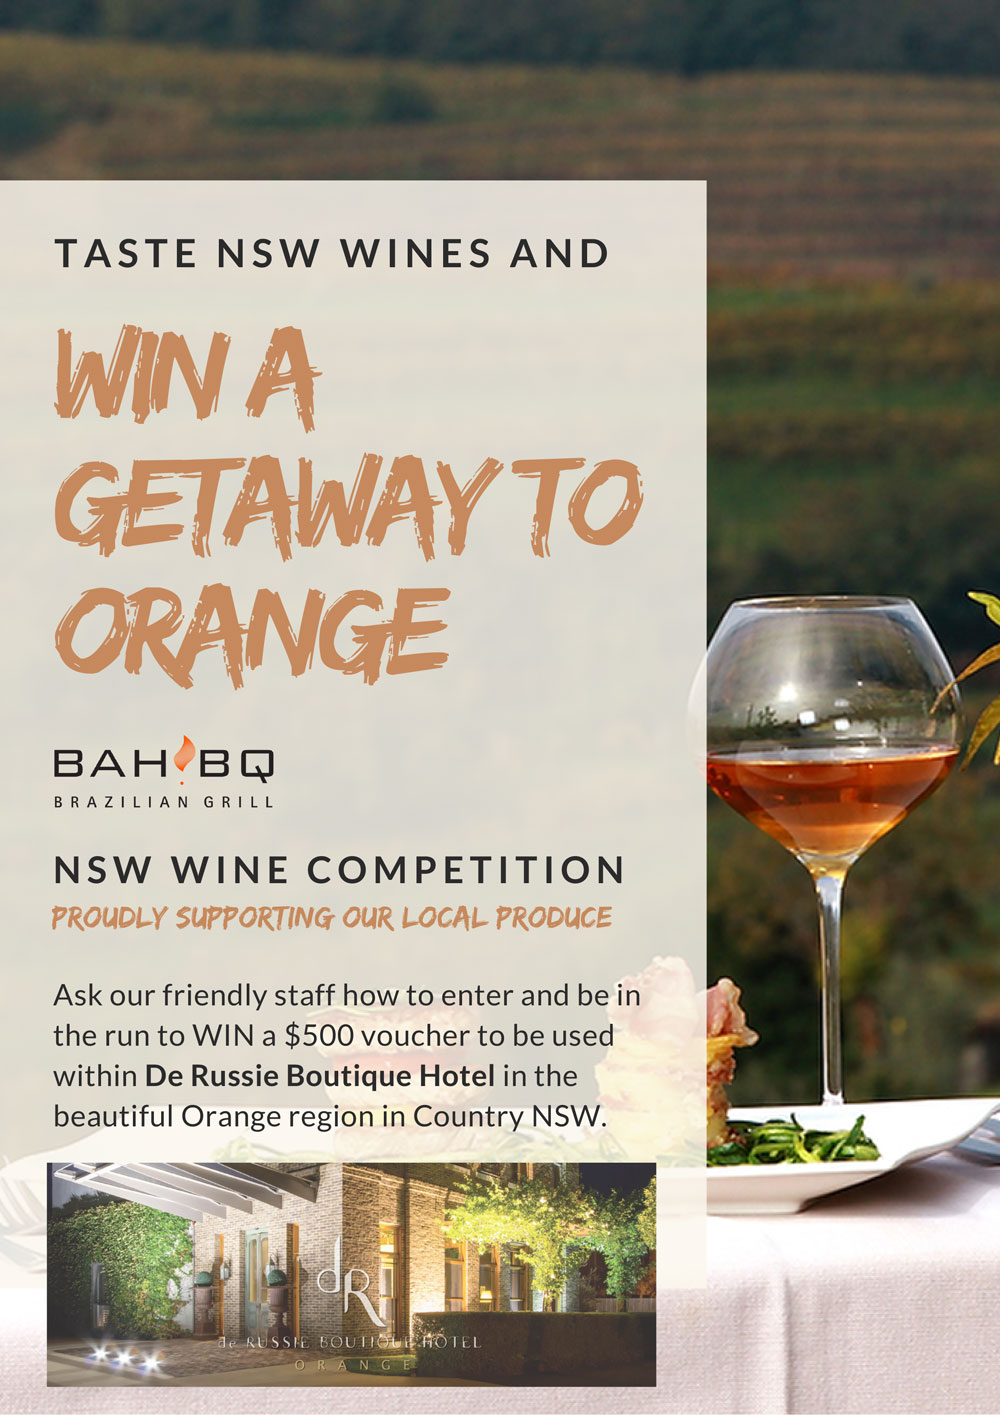 NSW Wines Competition – Win a “De Russie Boutique Hotel” $500 Voucher